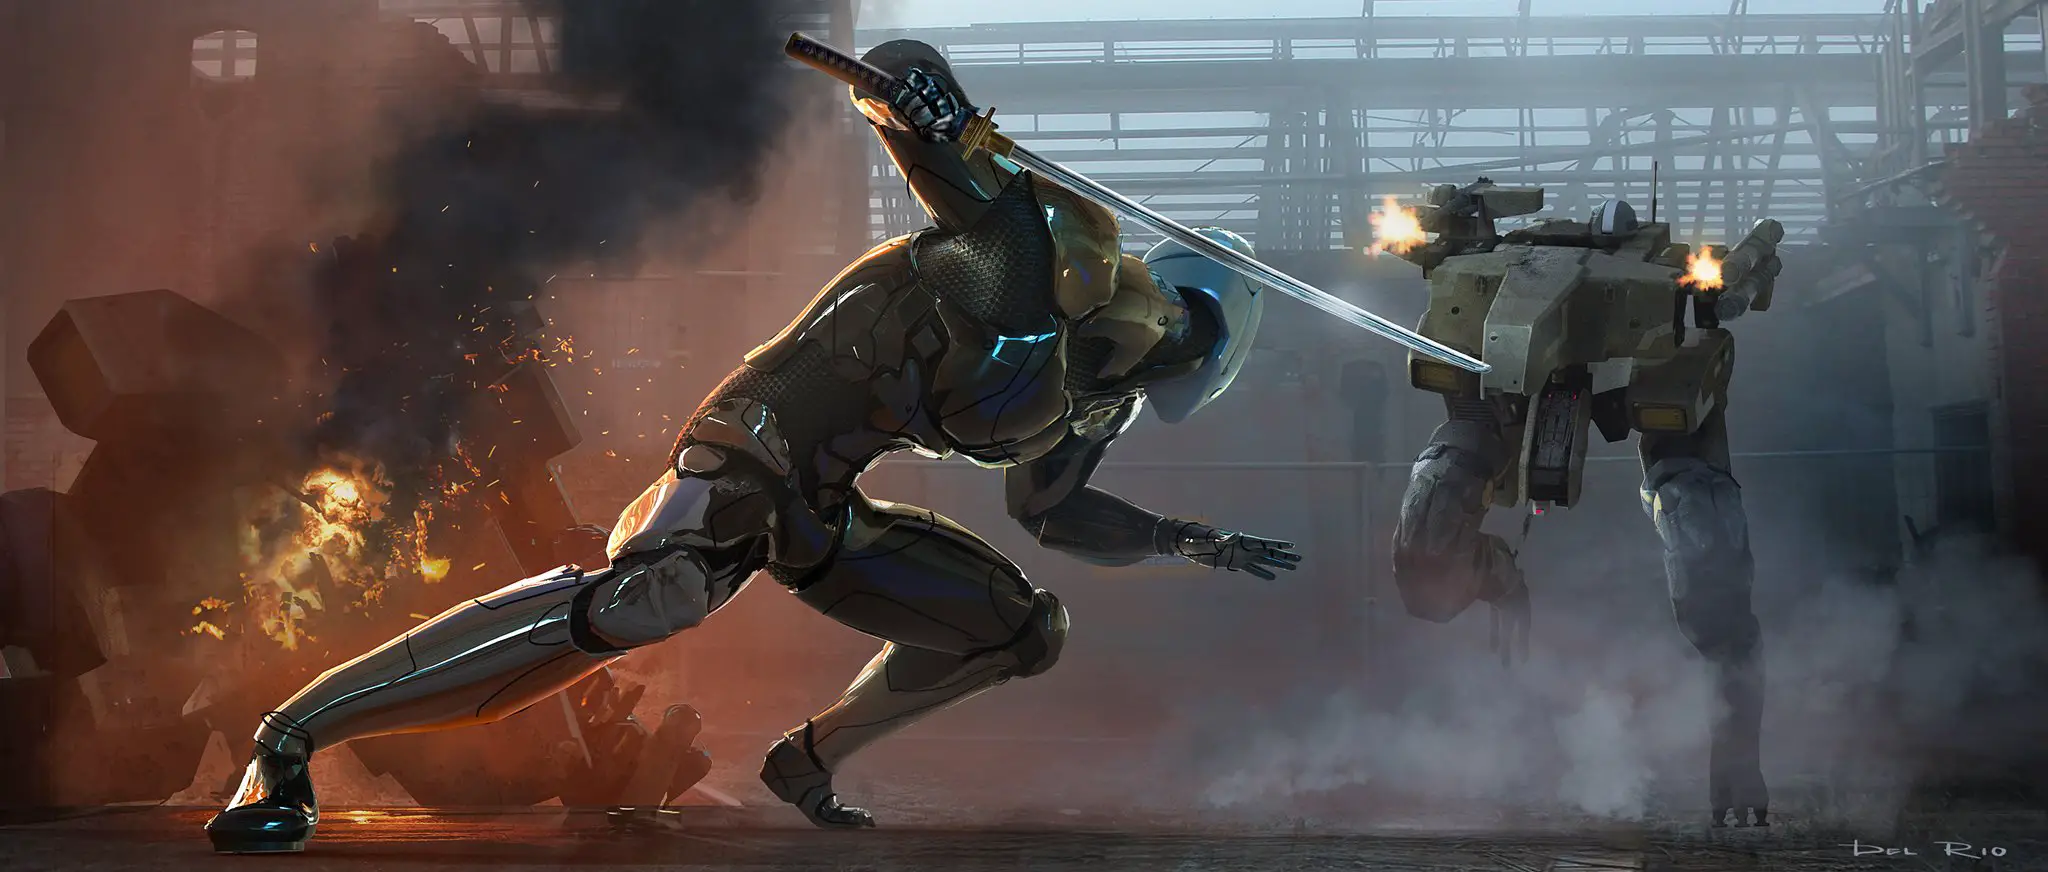 Metal-Gear-Solid-Movie-Concept-Art-2.jpg